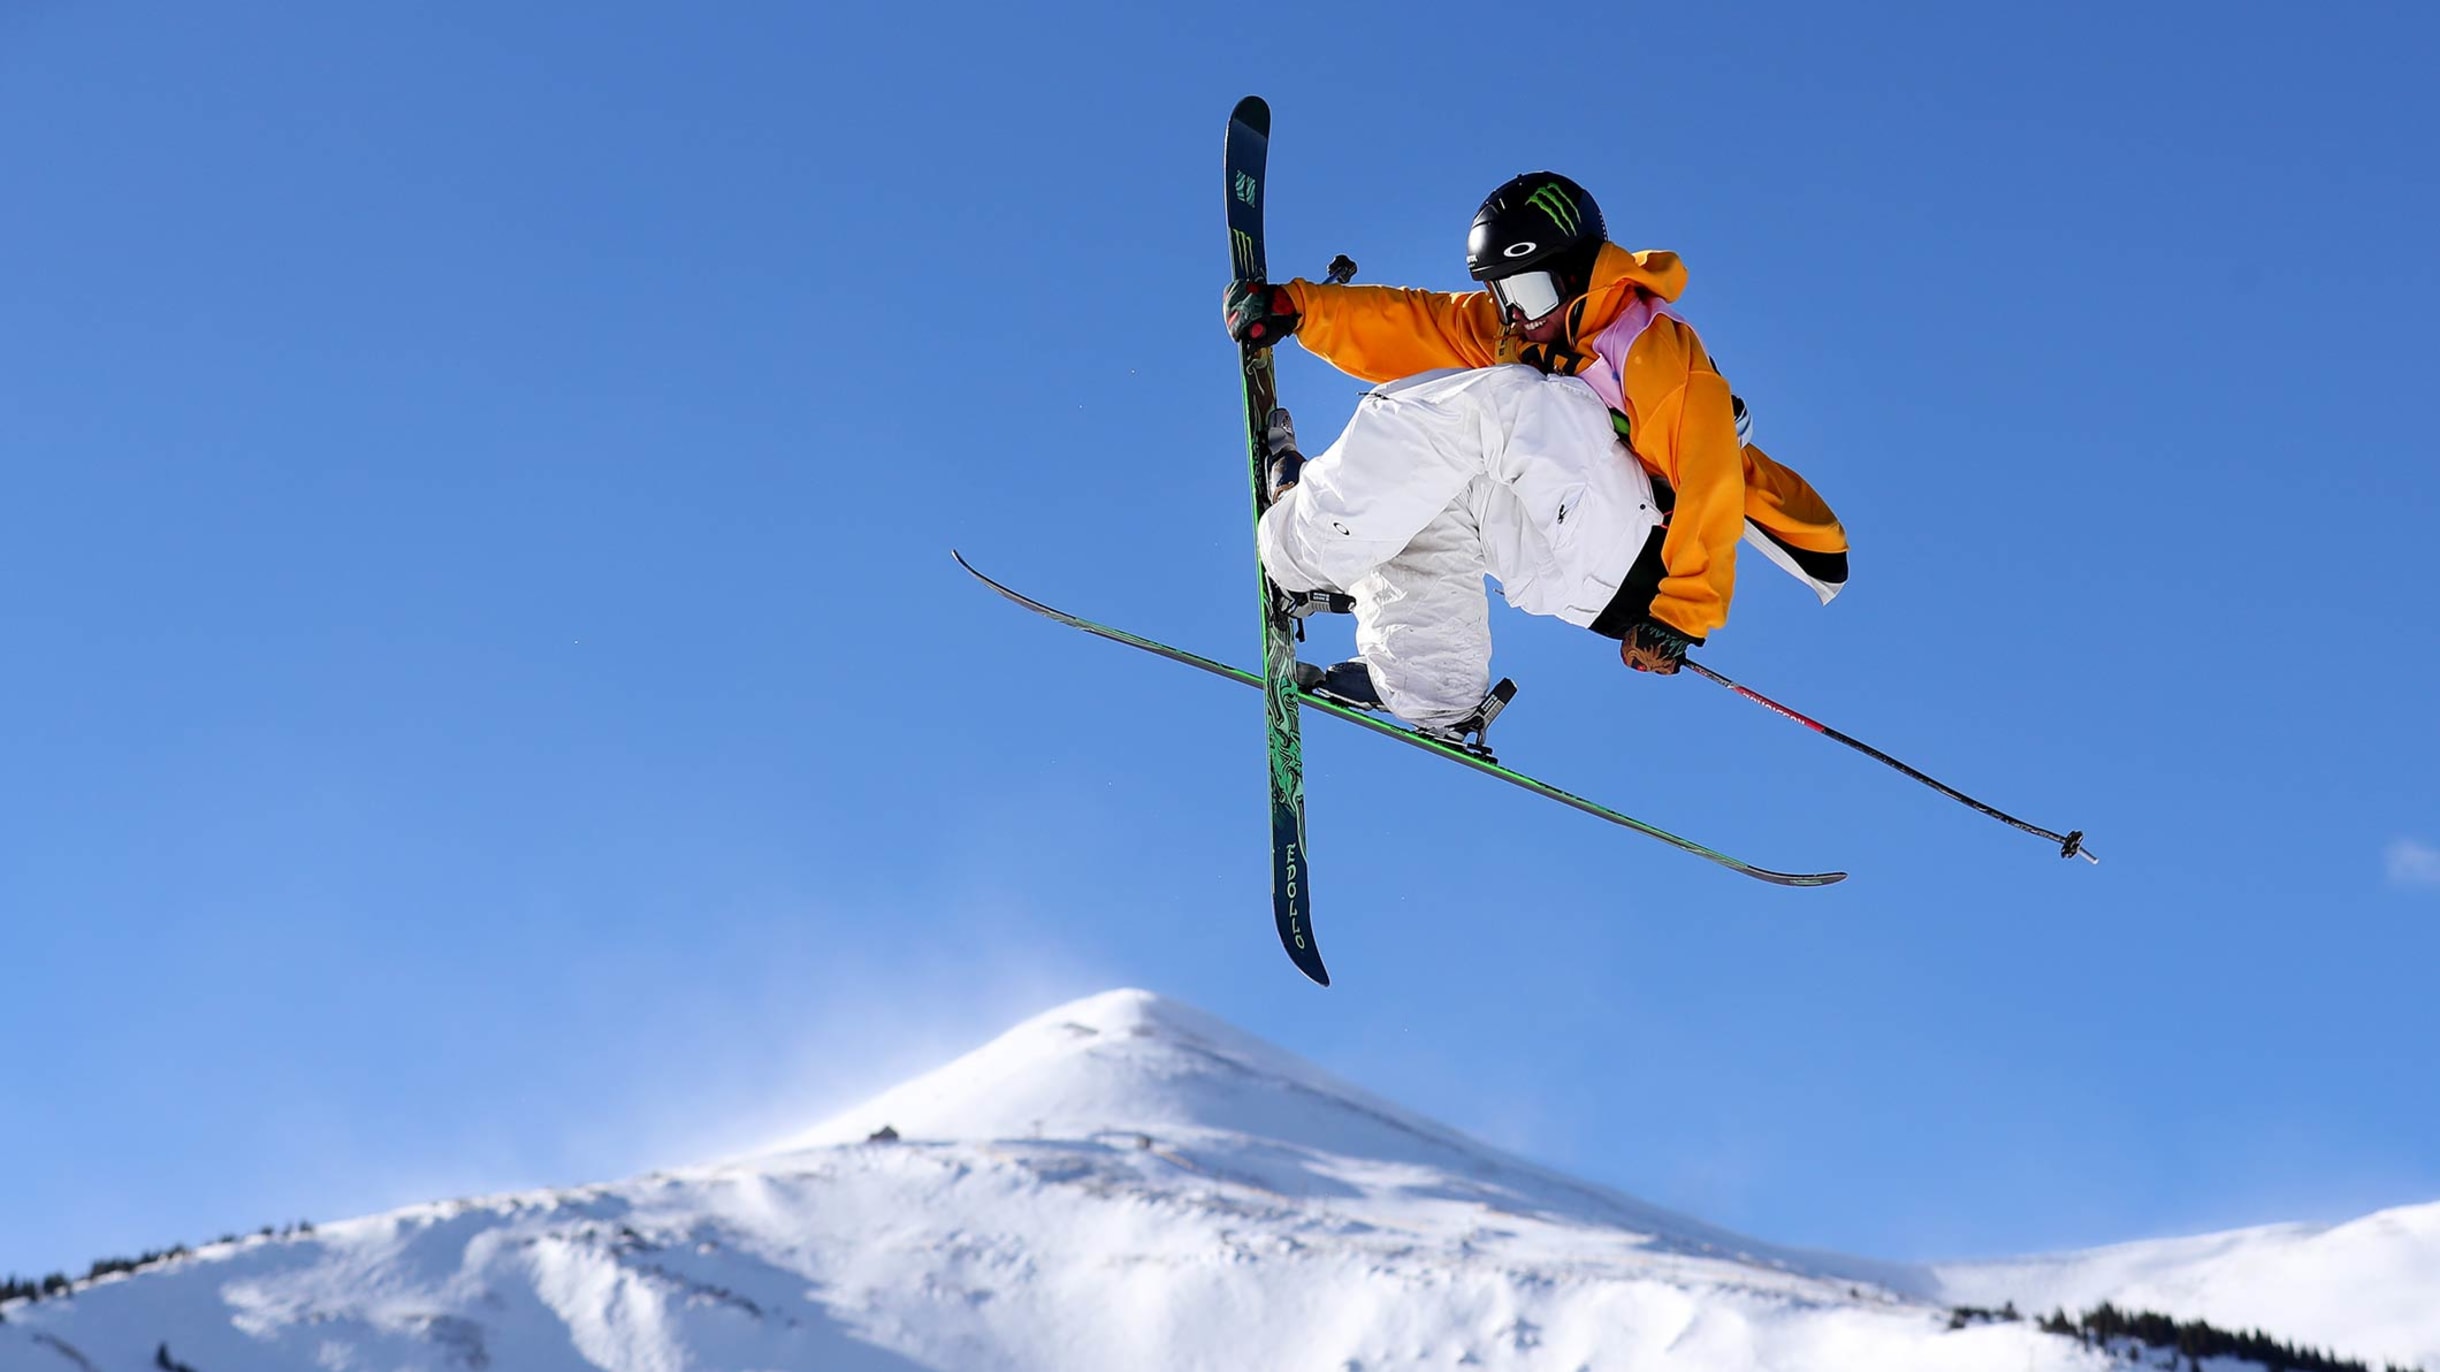 Secrets of freestyle skiing big air with magic man Henrik Harlaut